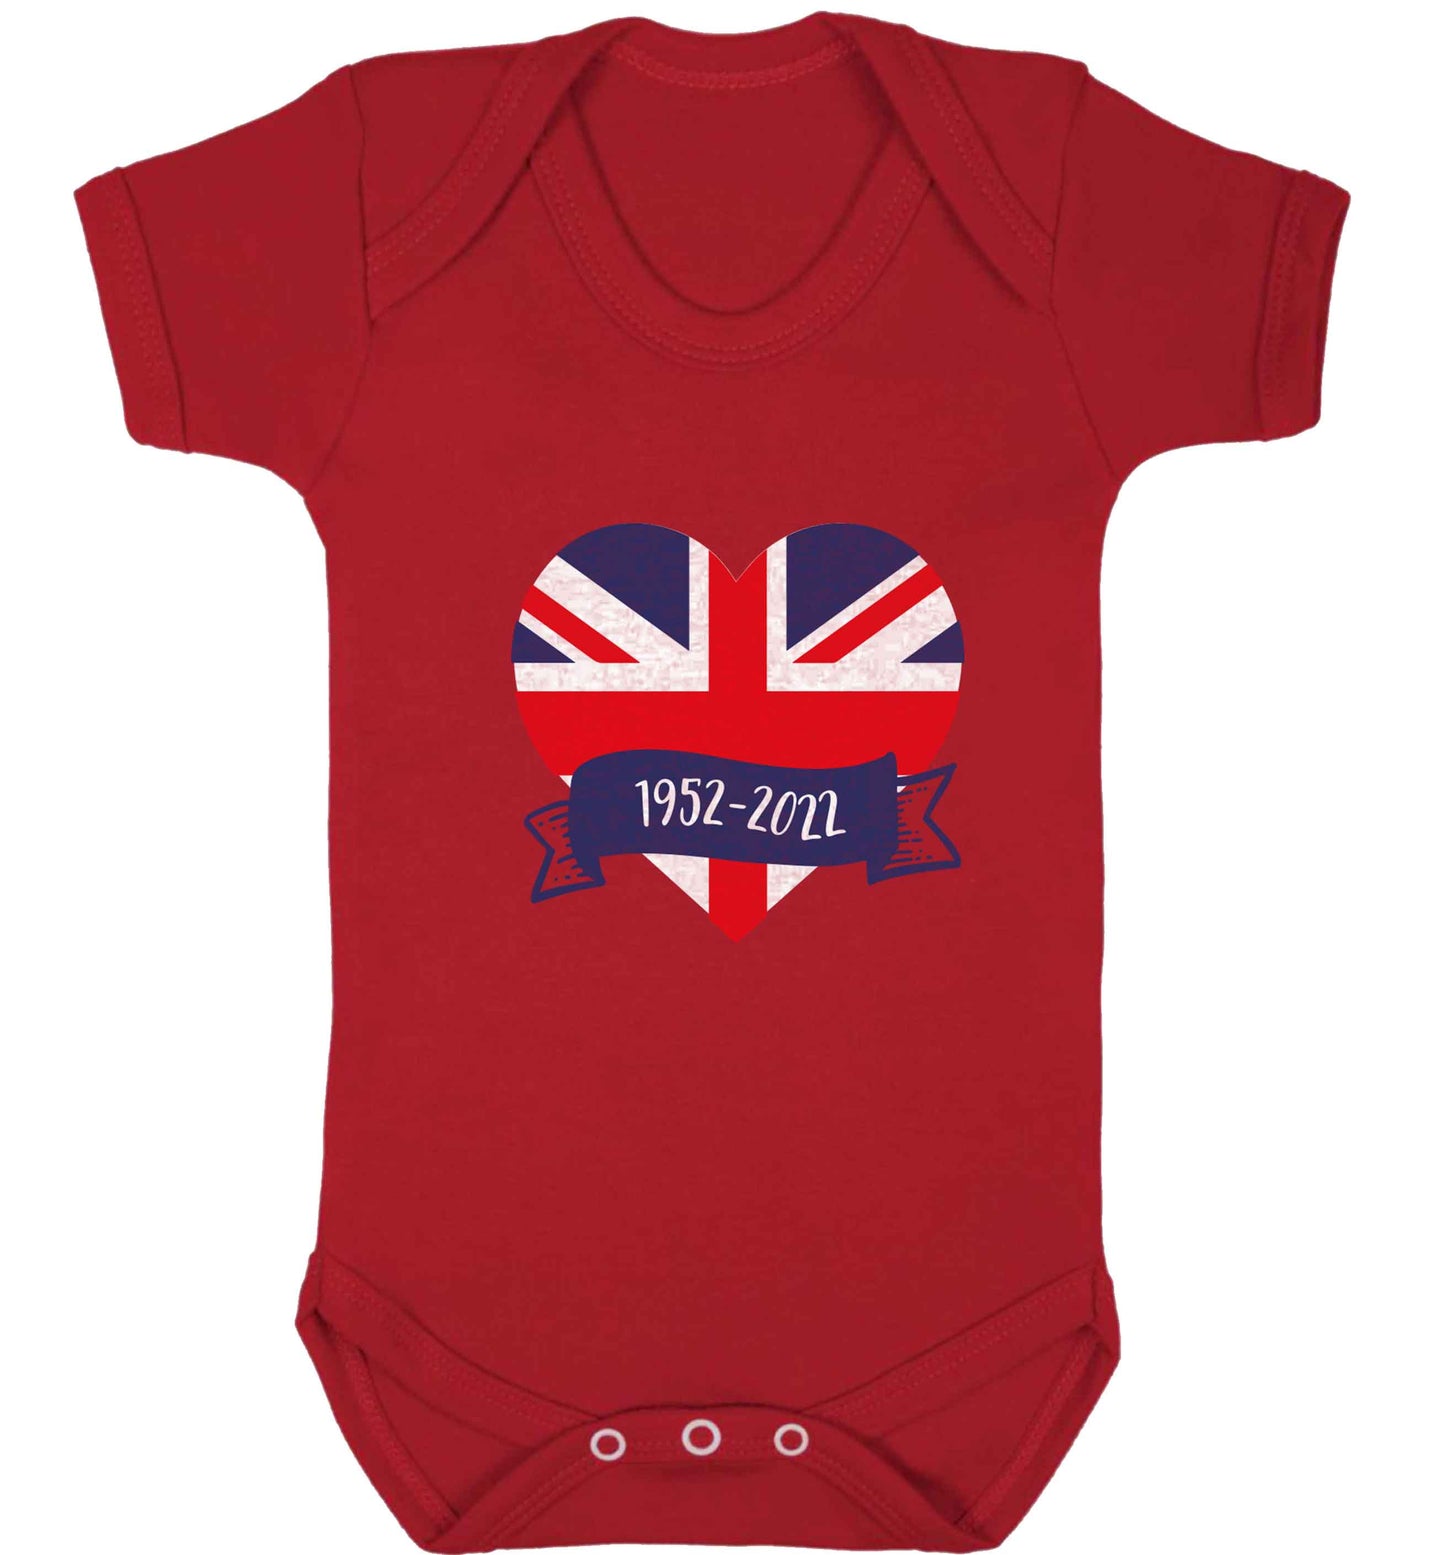 British flag heart Queens jubilee baby vest red 18-24 months